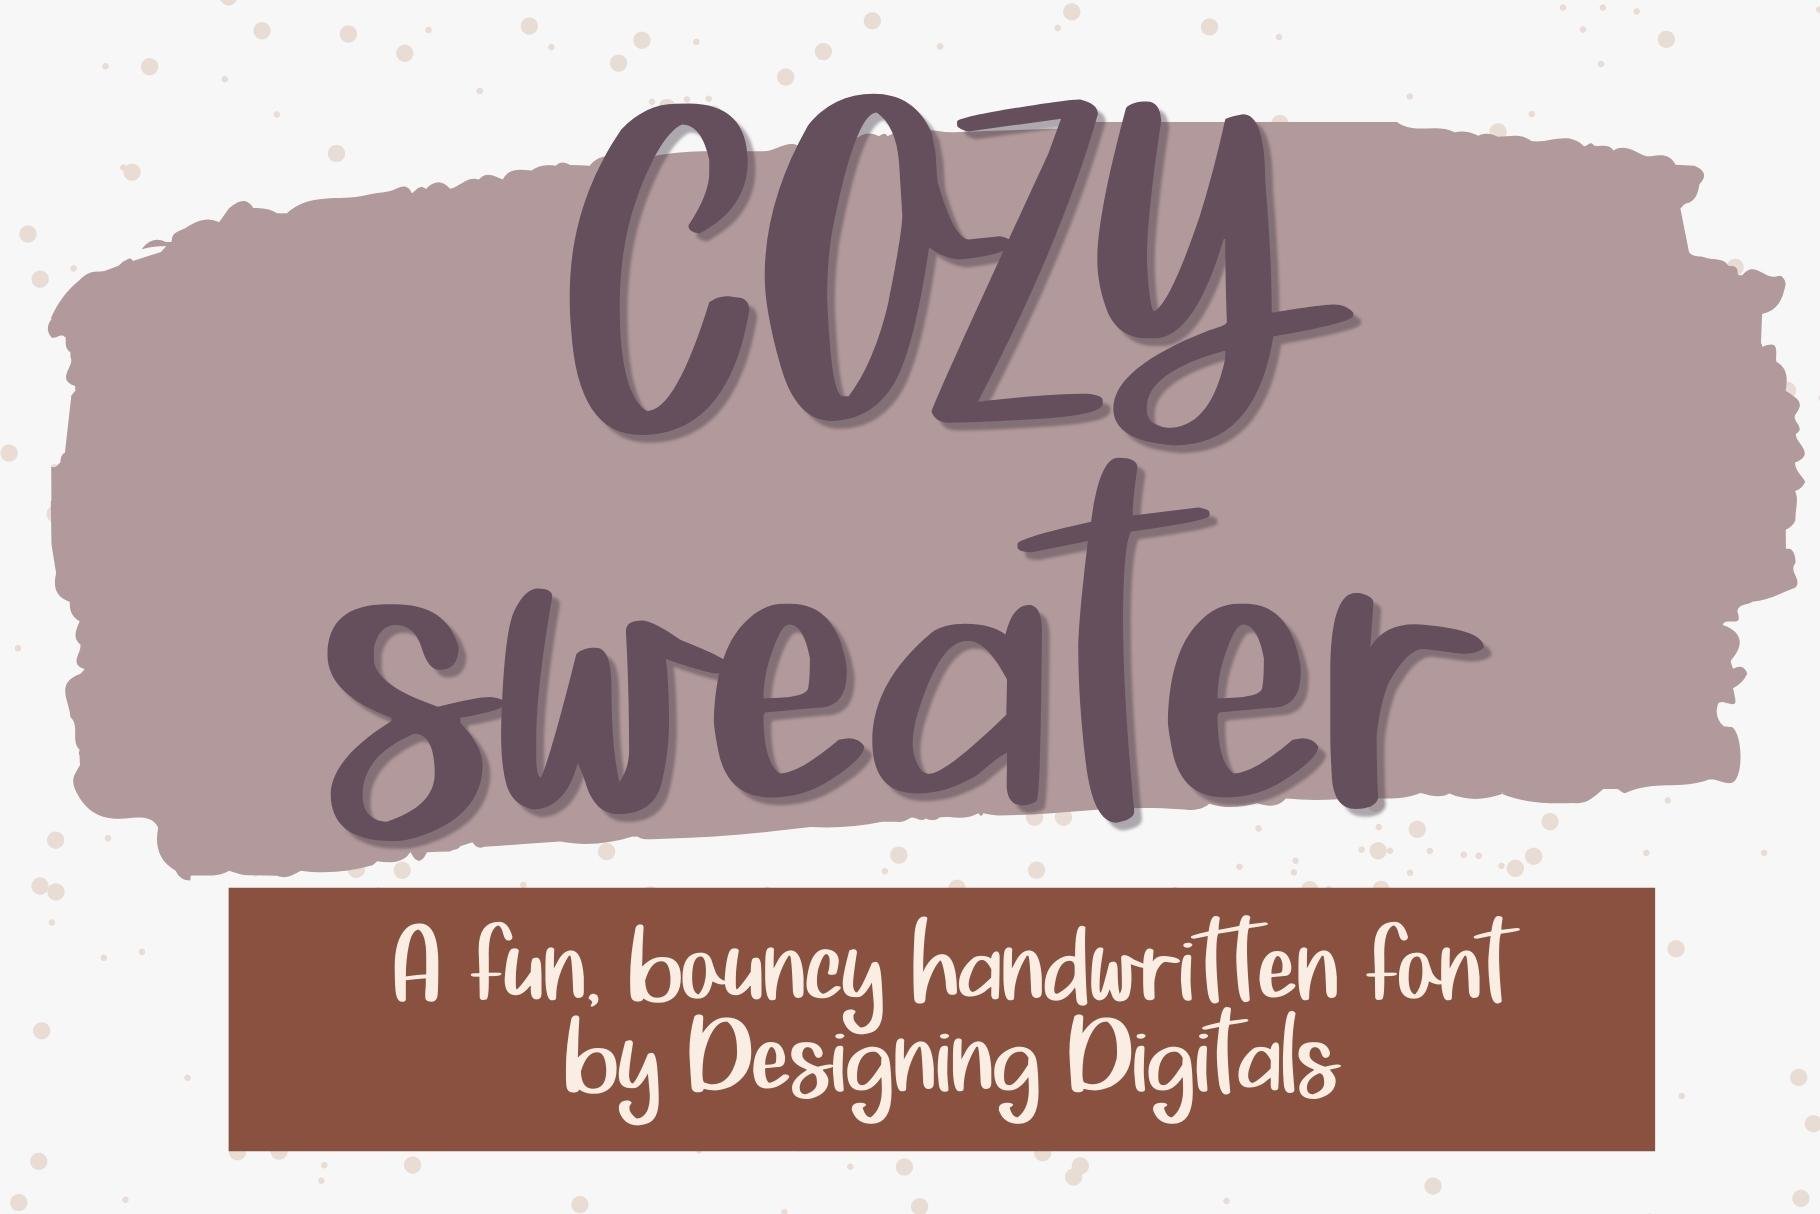 Cozy Sweater - Fun Handwritten Font cover image.